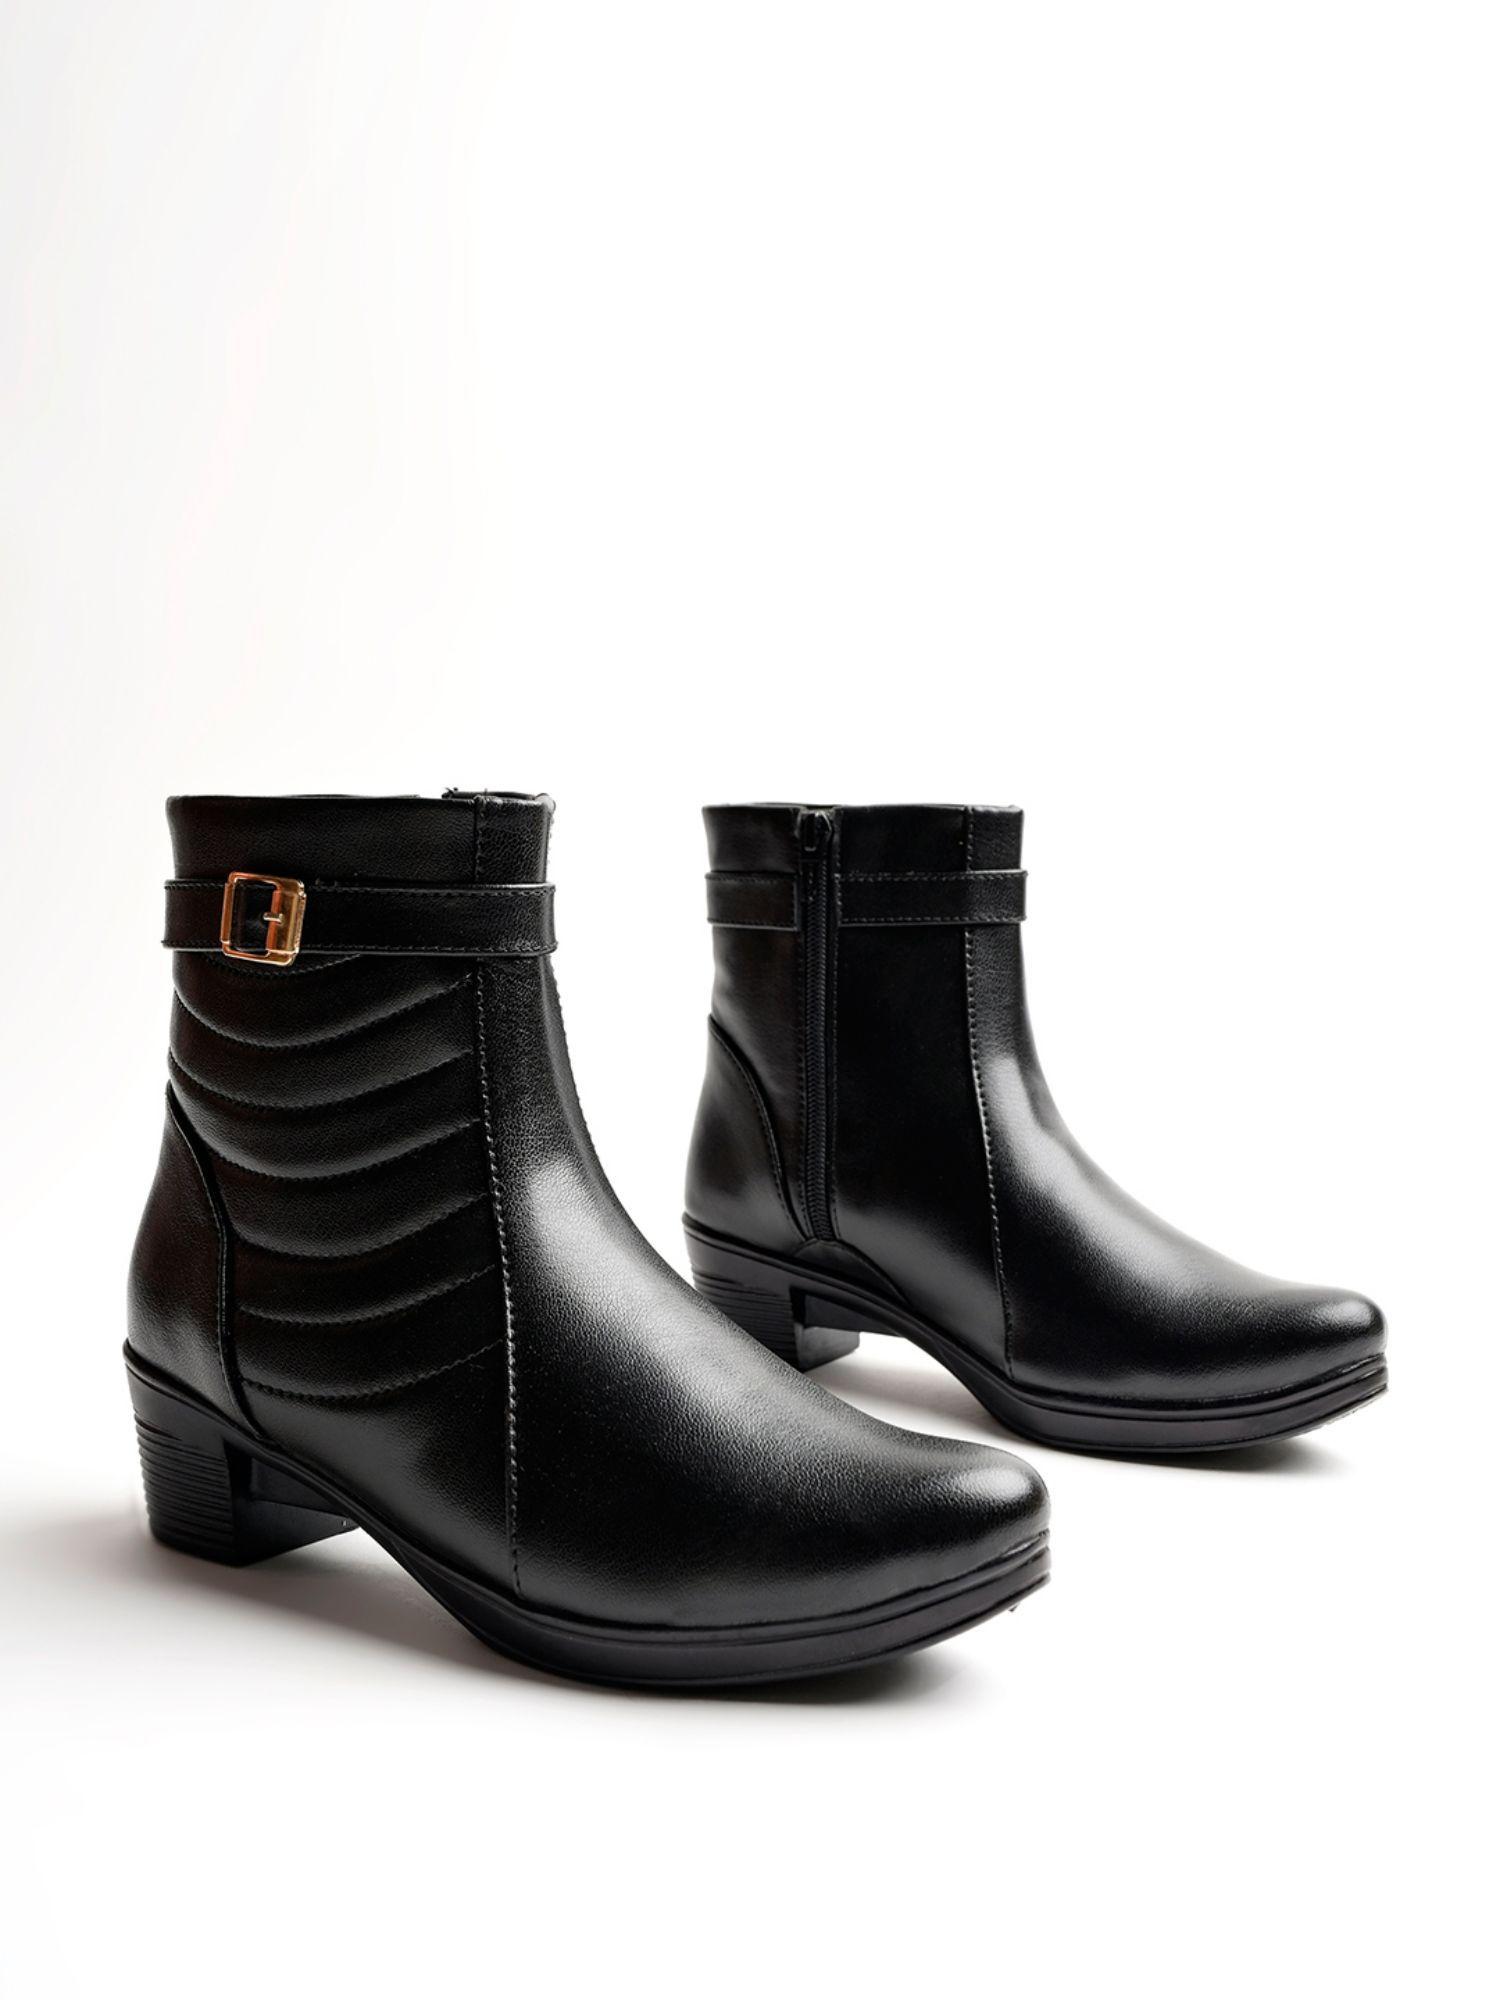 stylish-black-boots